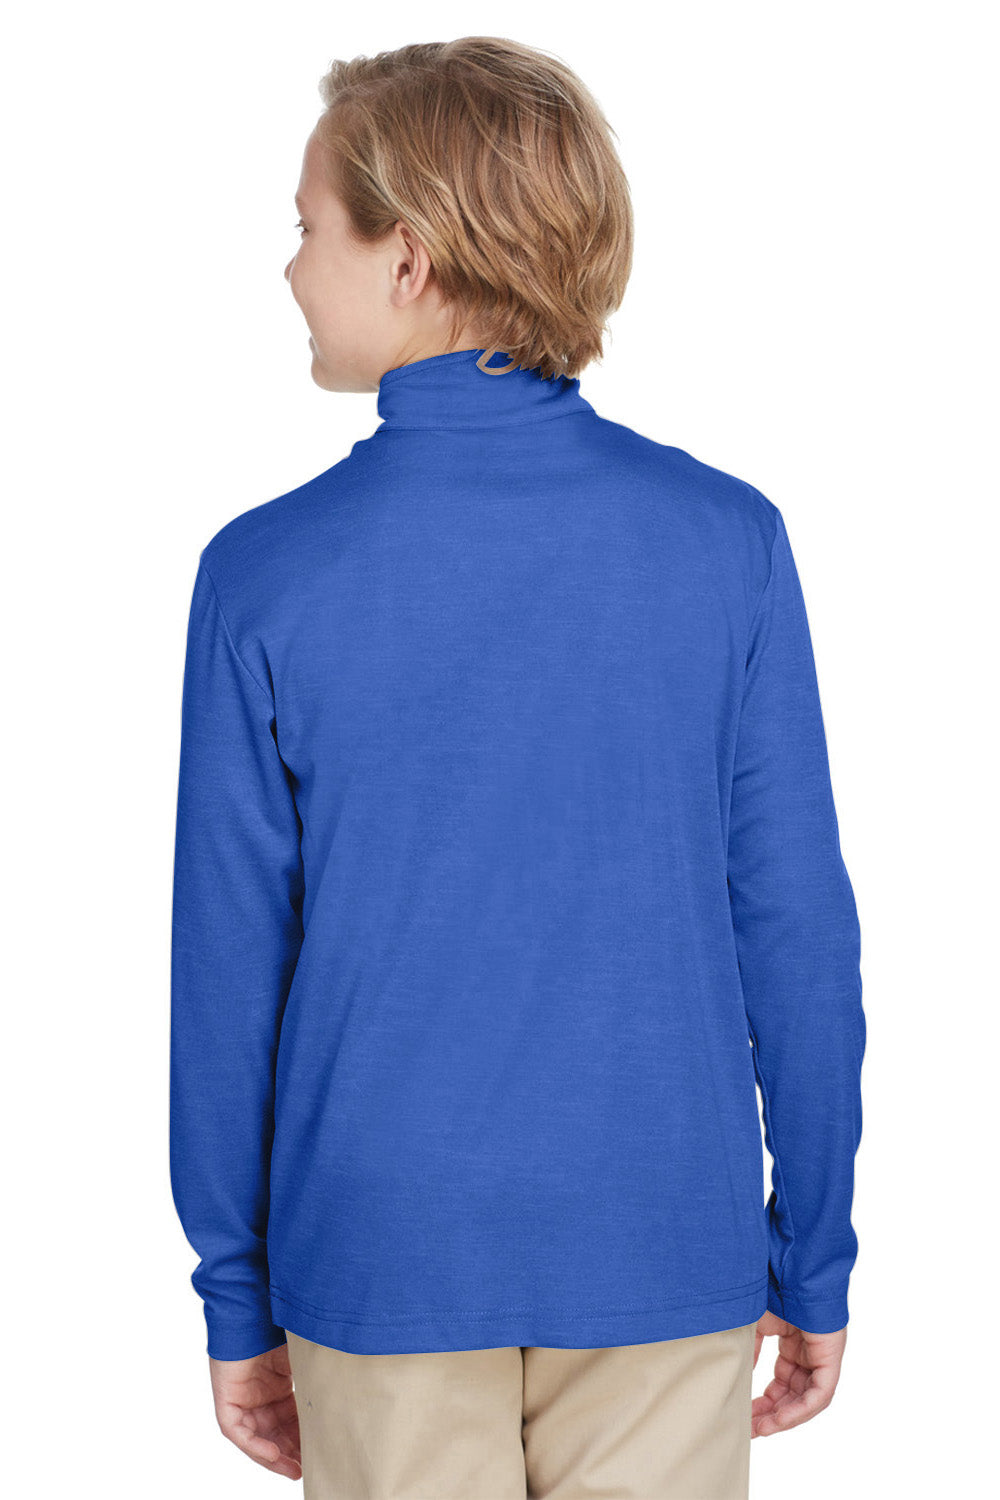 Team 365 TT31HY Youth Zone Sonic Performance Moisture Wicking 1/4 Zip Sweatshirt Royal Blue Back